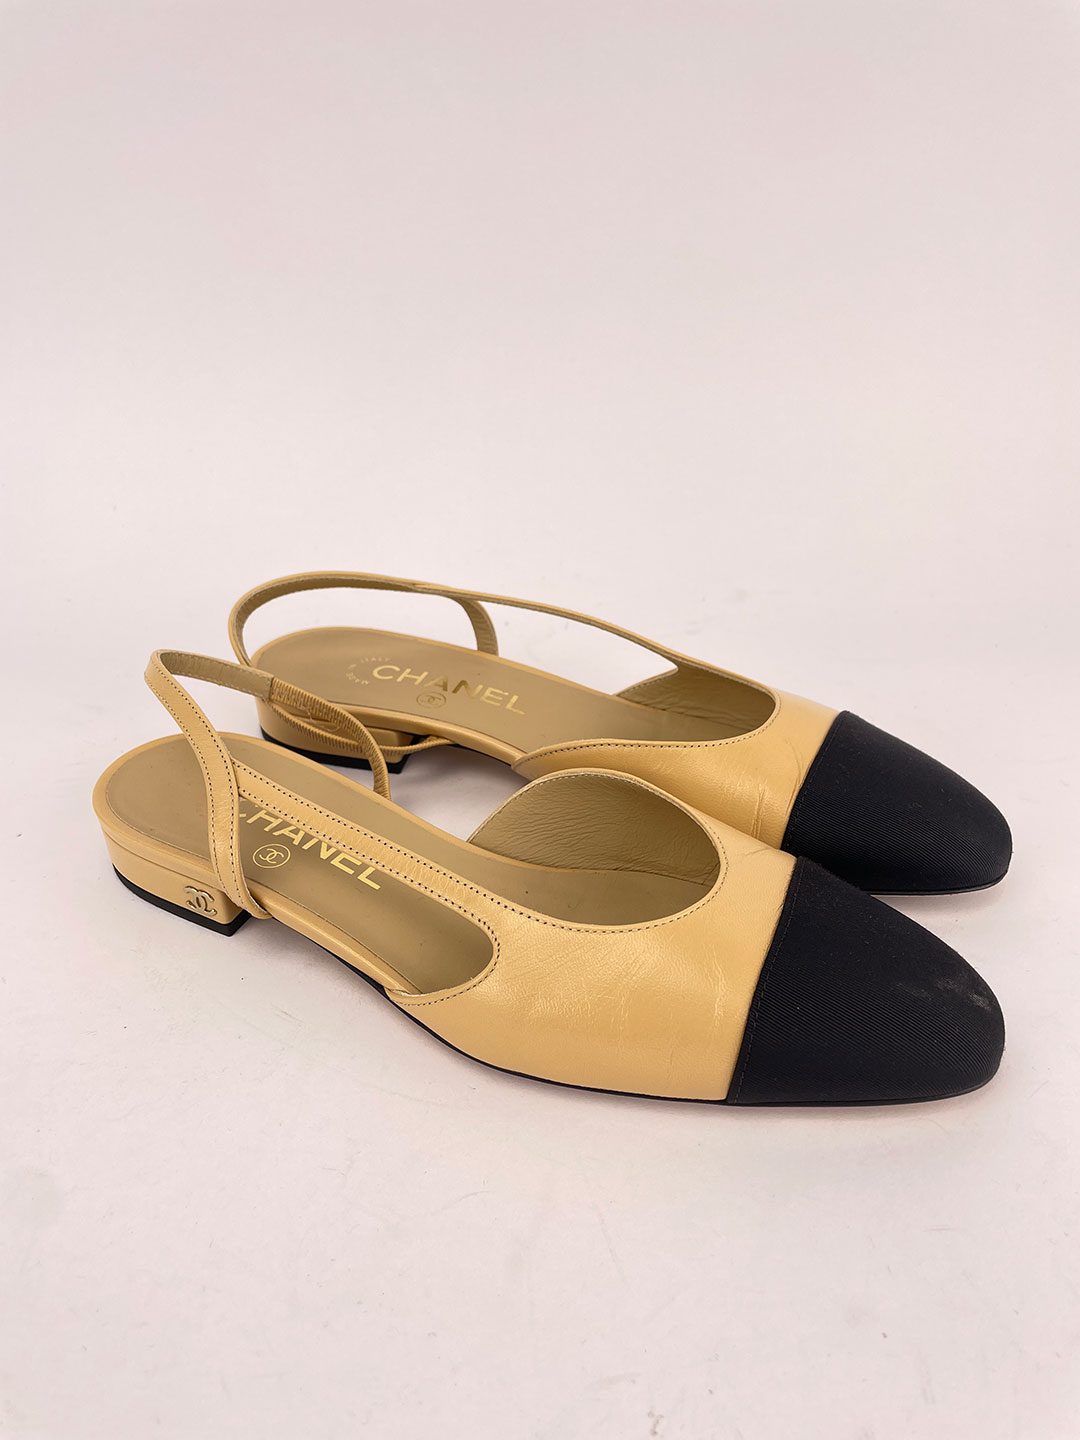 Chanel Leather Beige & Black Slingback Flat Sandals Size 37 (UK 4